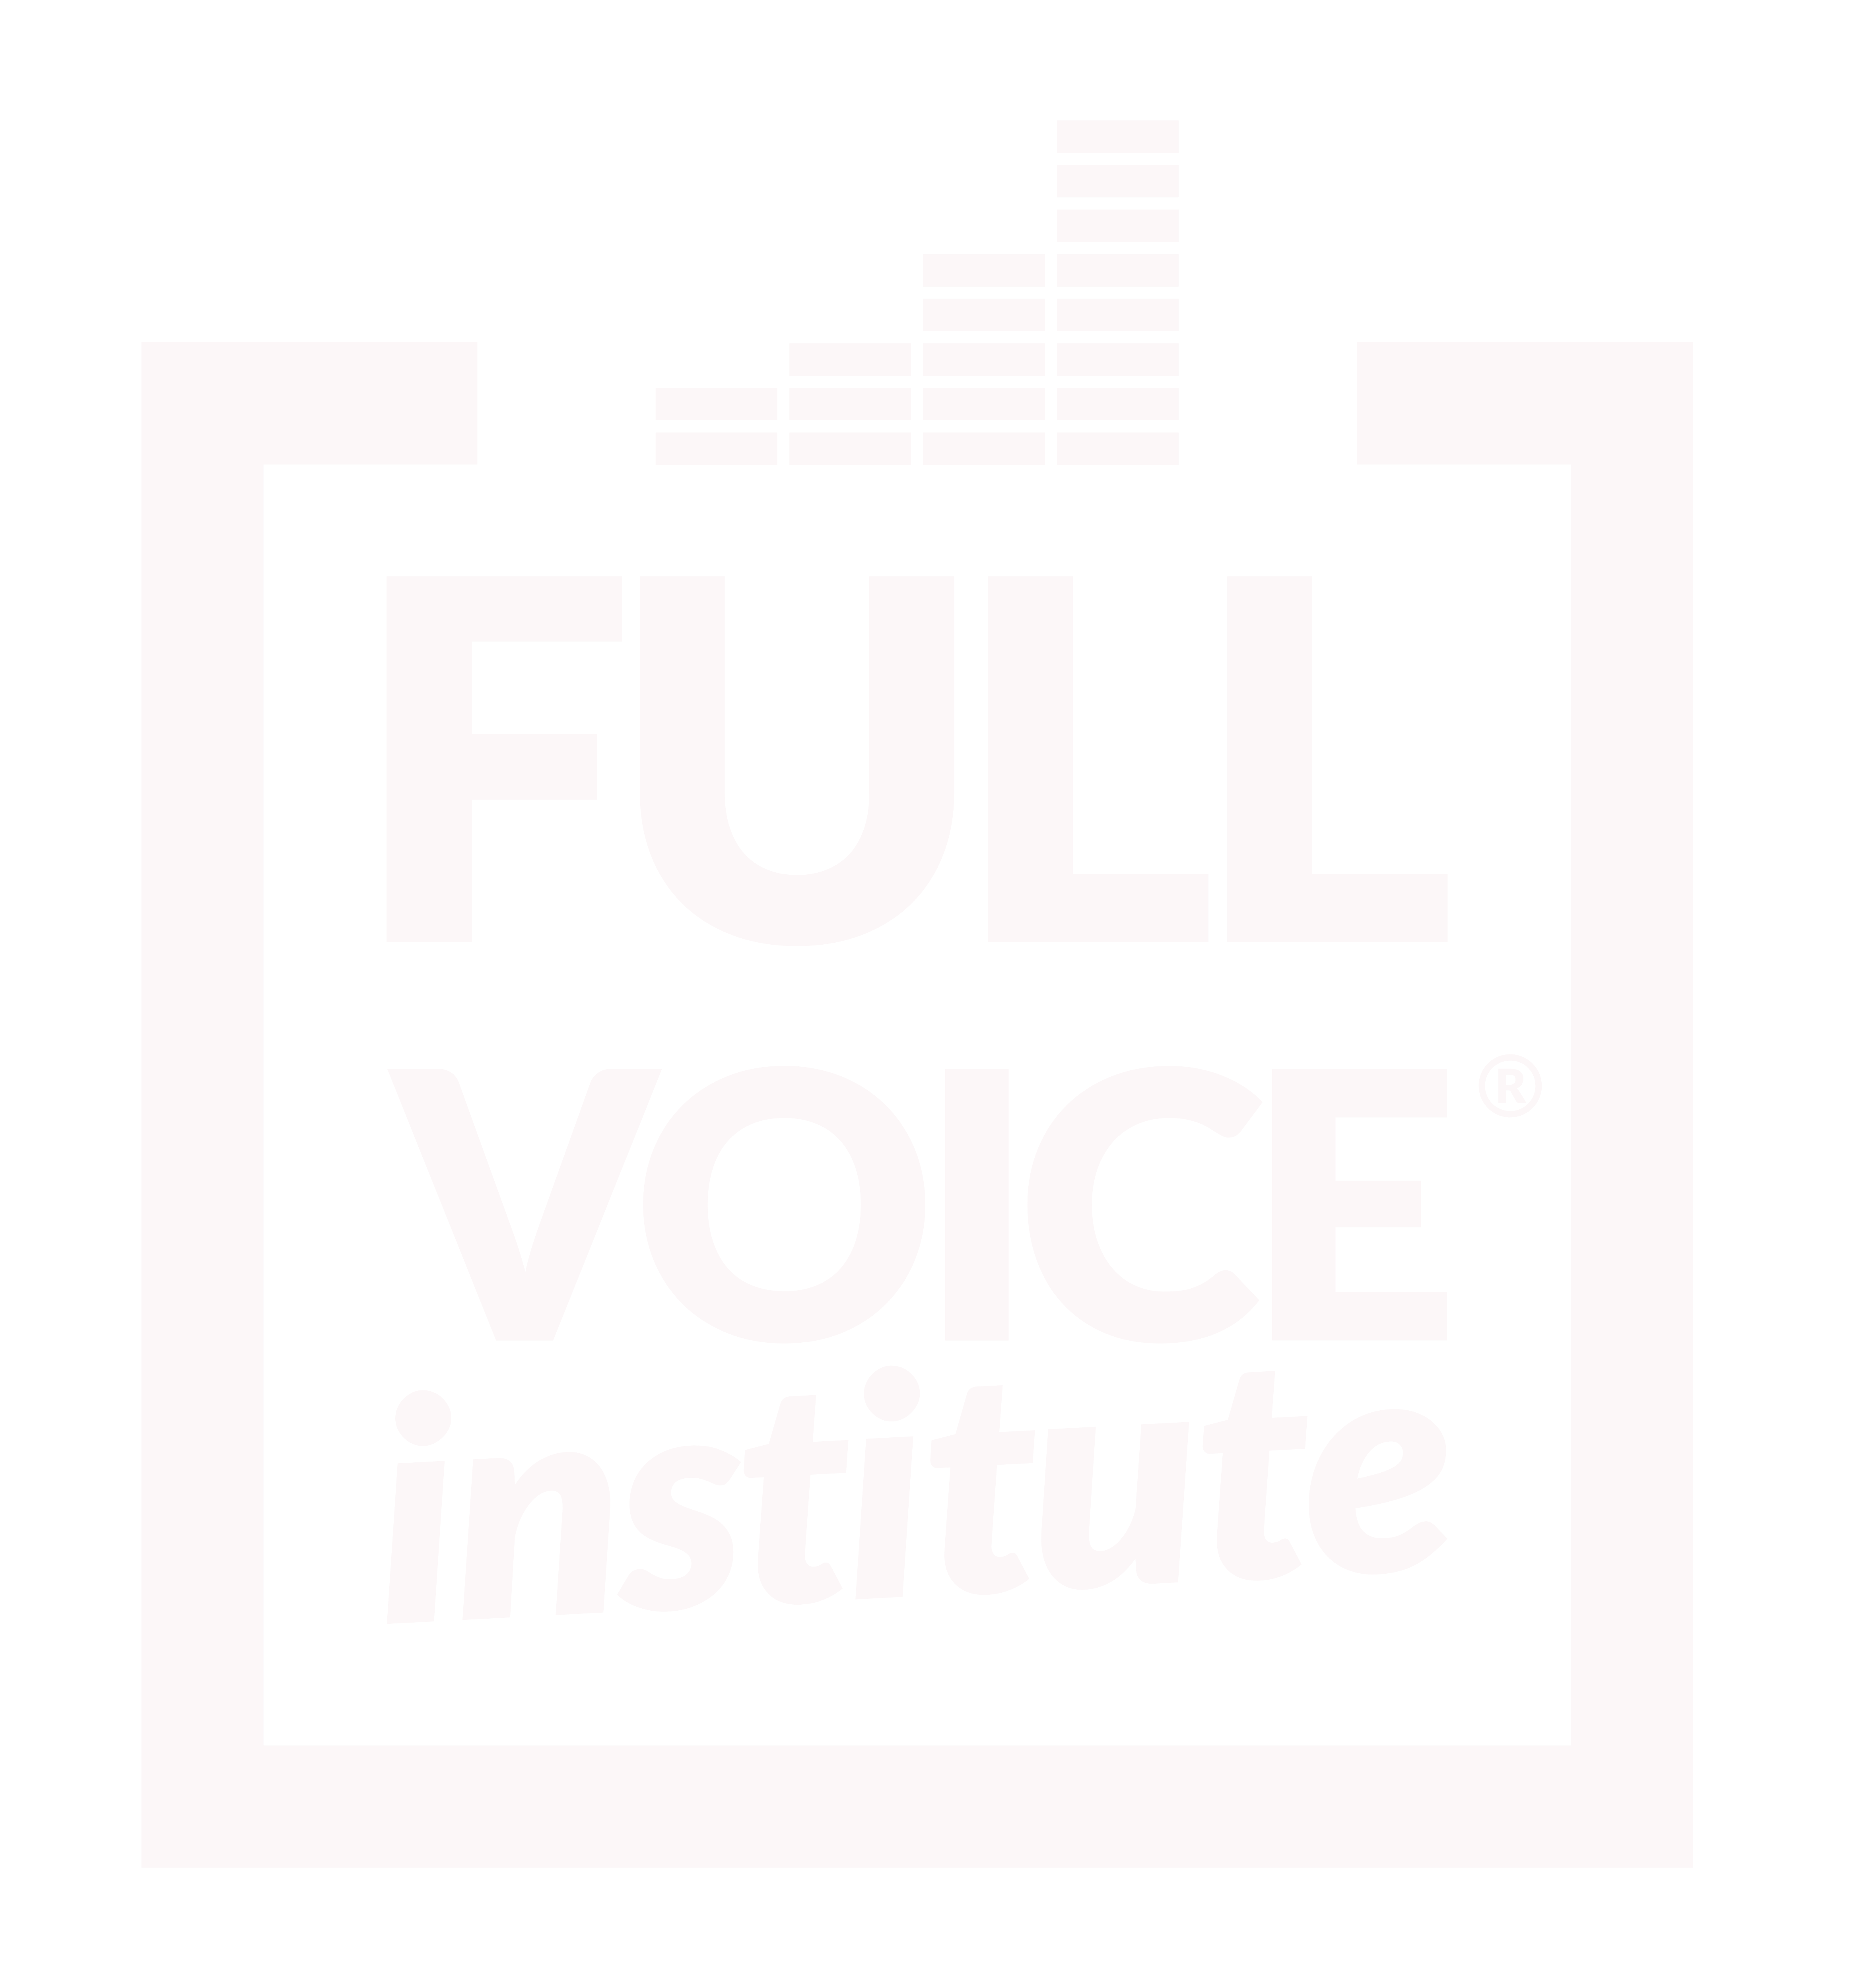 Logo Full Voice Institute - Horizontal Colorido com texto branco